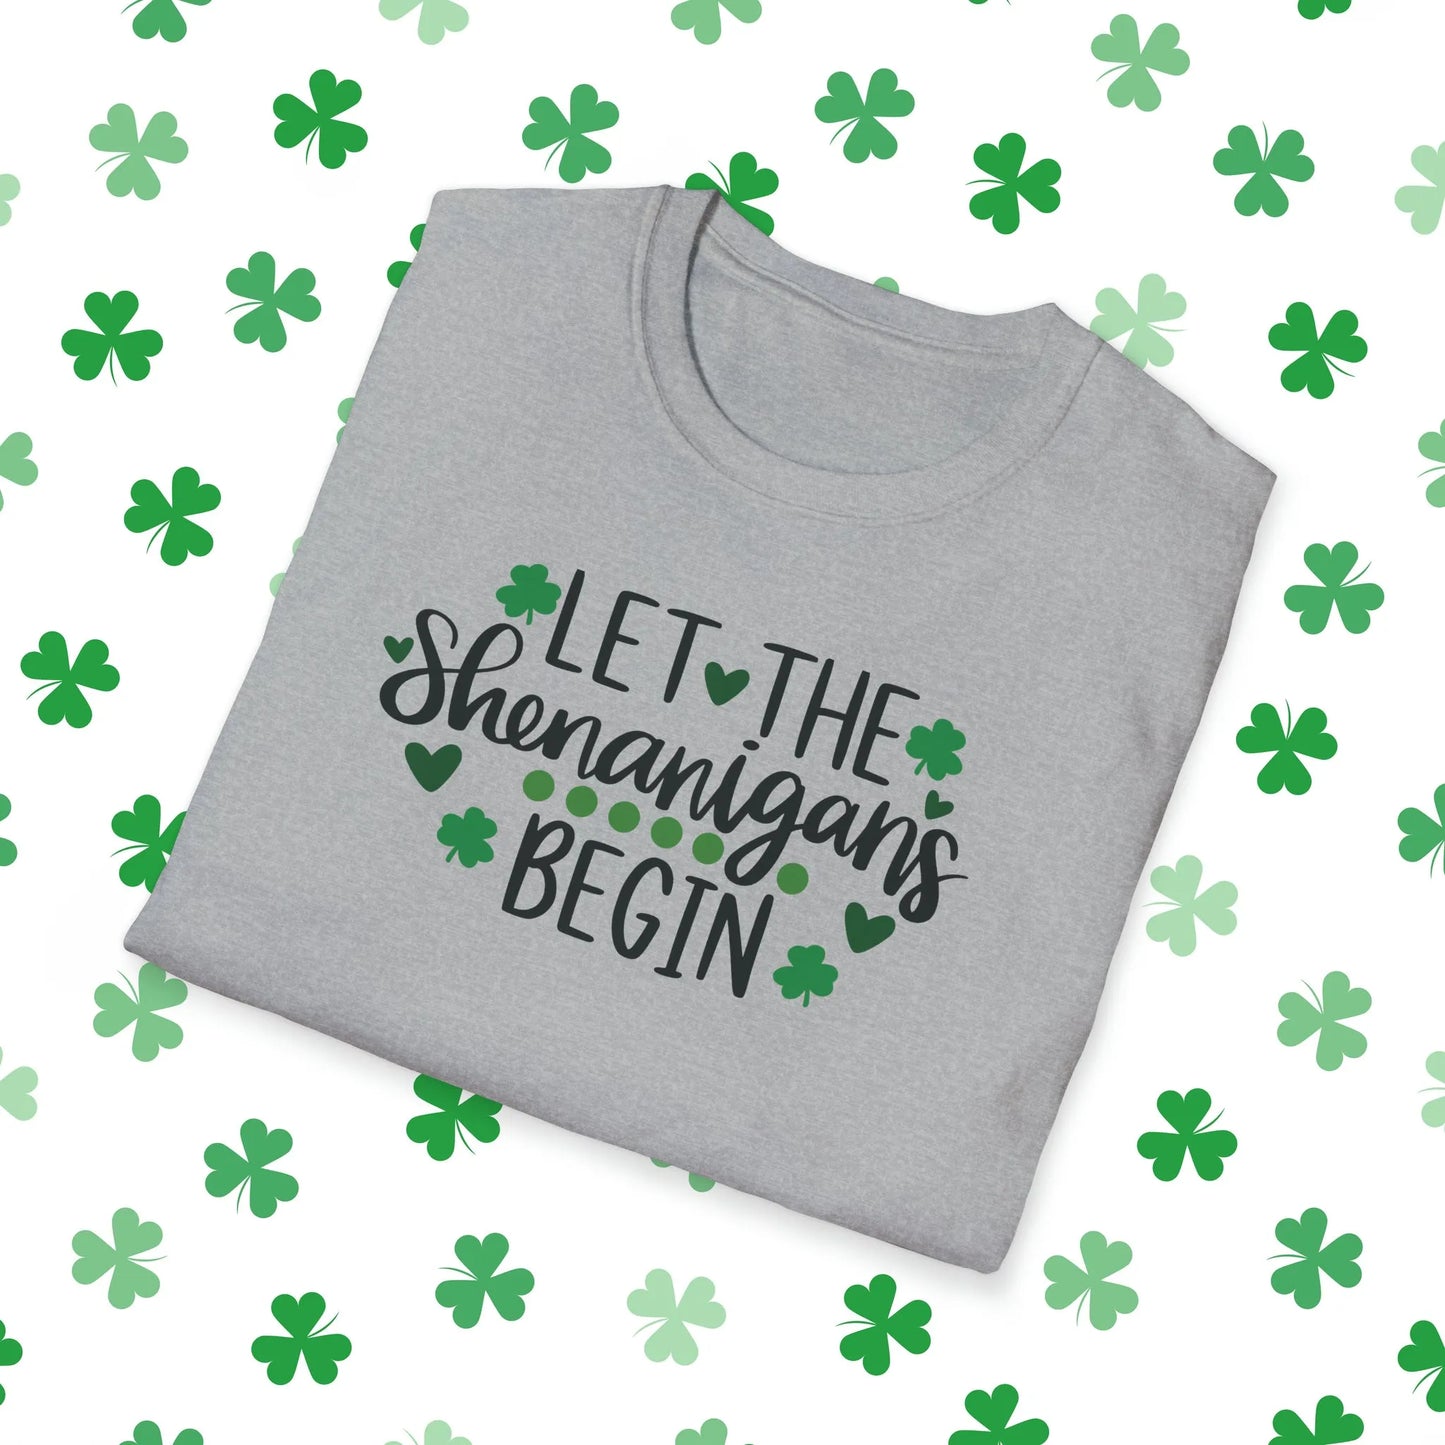 Let The Shenanigans Begin St. Patrick's Day T-Shirt - Comfort & Charm - Let The Shenanigans Begin Shirt Grey Folded